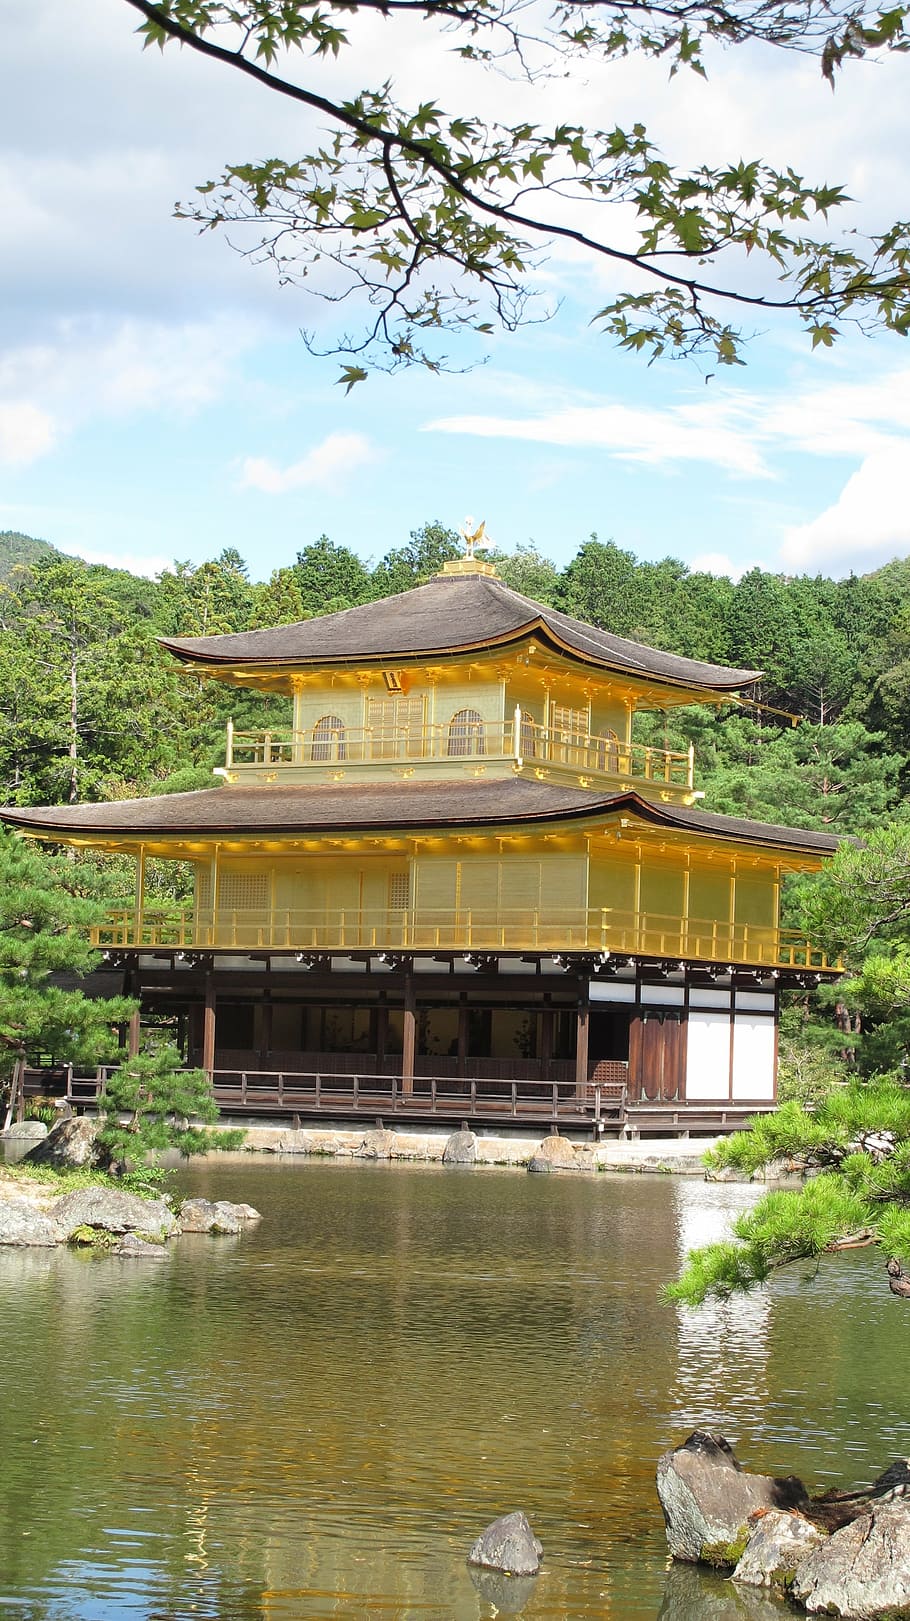 kinkaku-ji, kyoto, japão, templo do pavilhão dourado, 鹿苑 寺, 金 閣 寺, 京都, 日本, estrutura construída, árvore